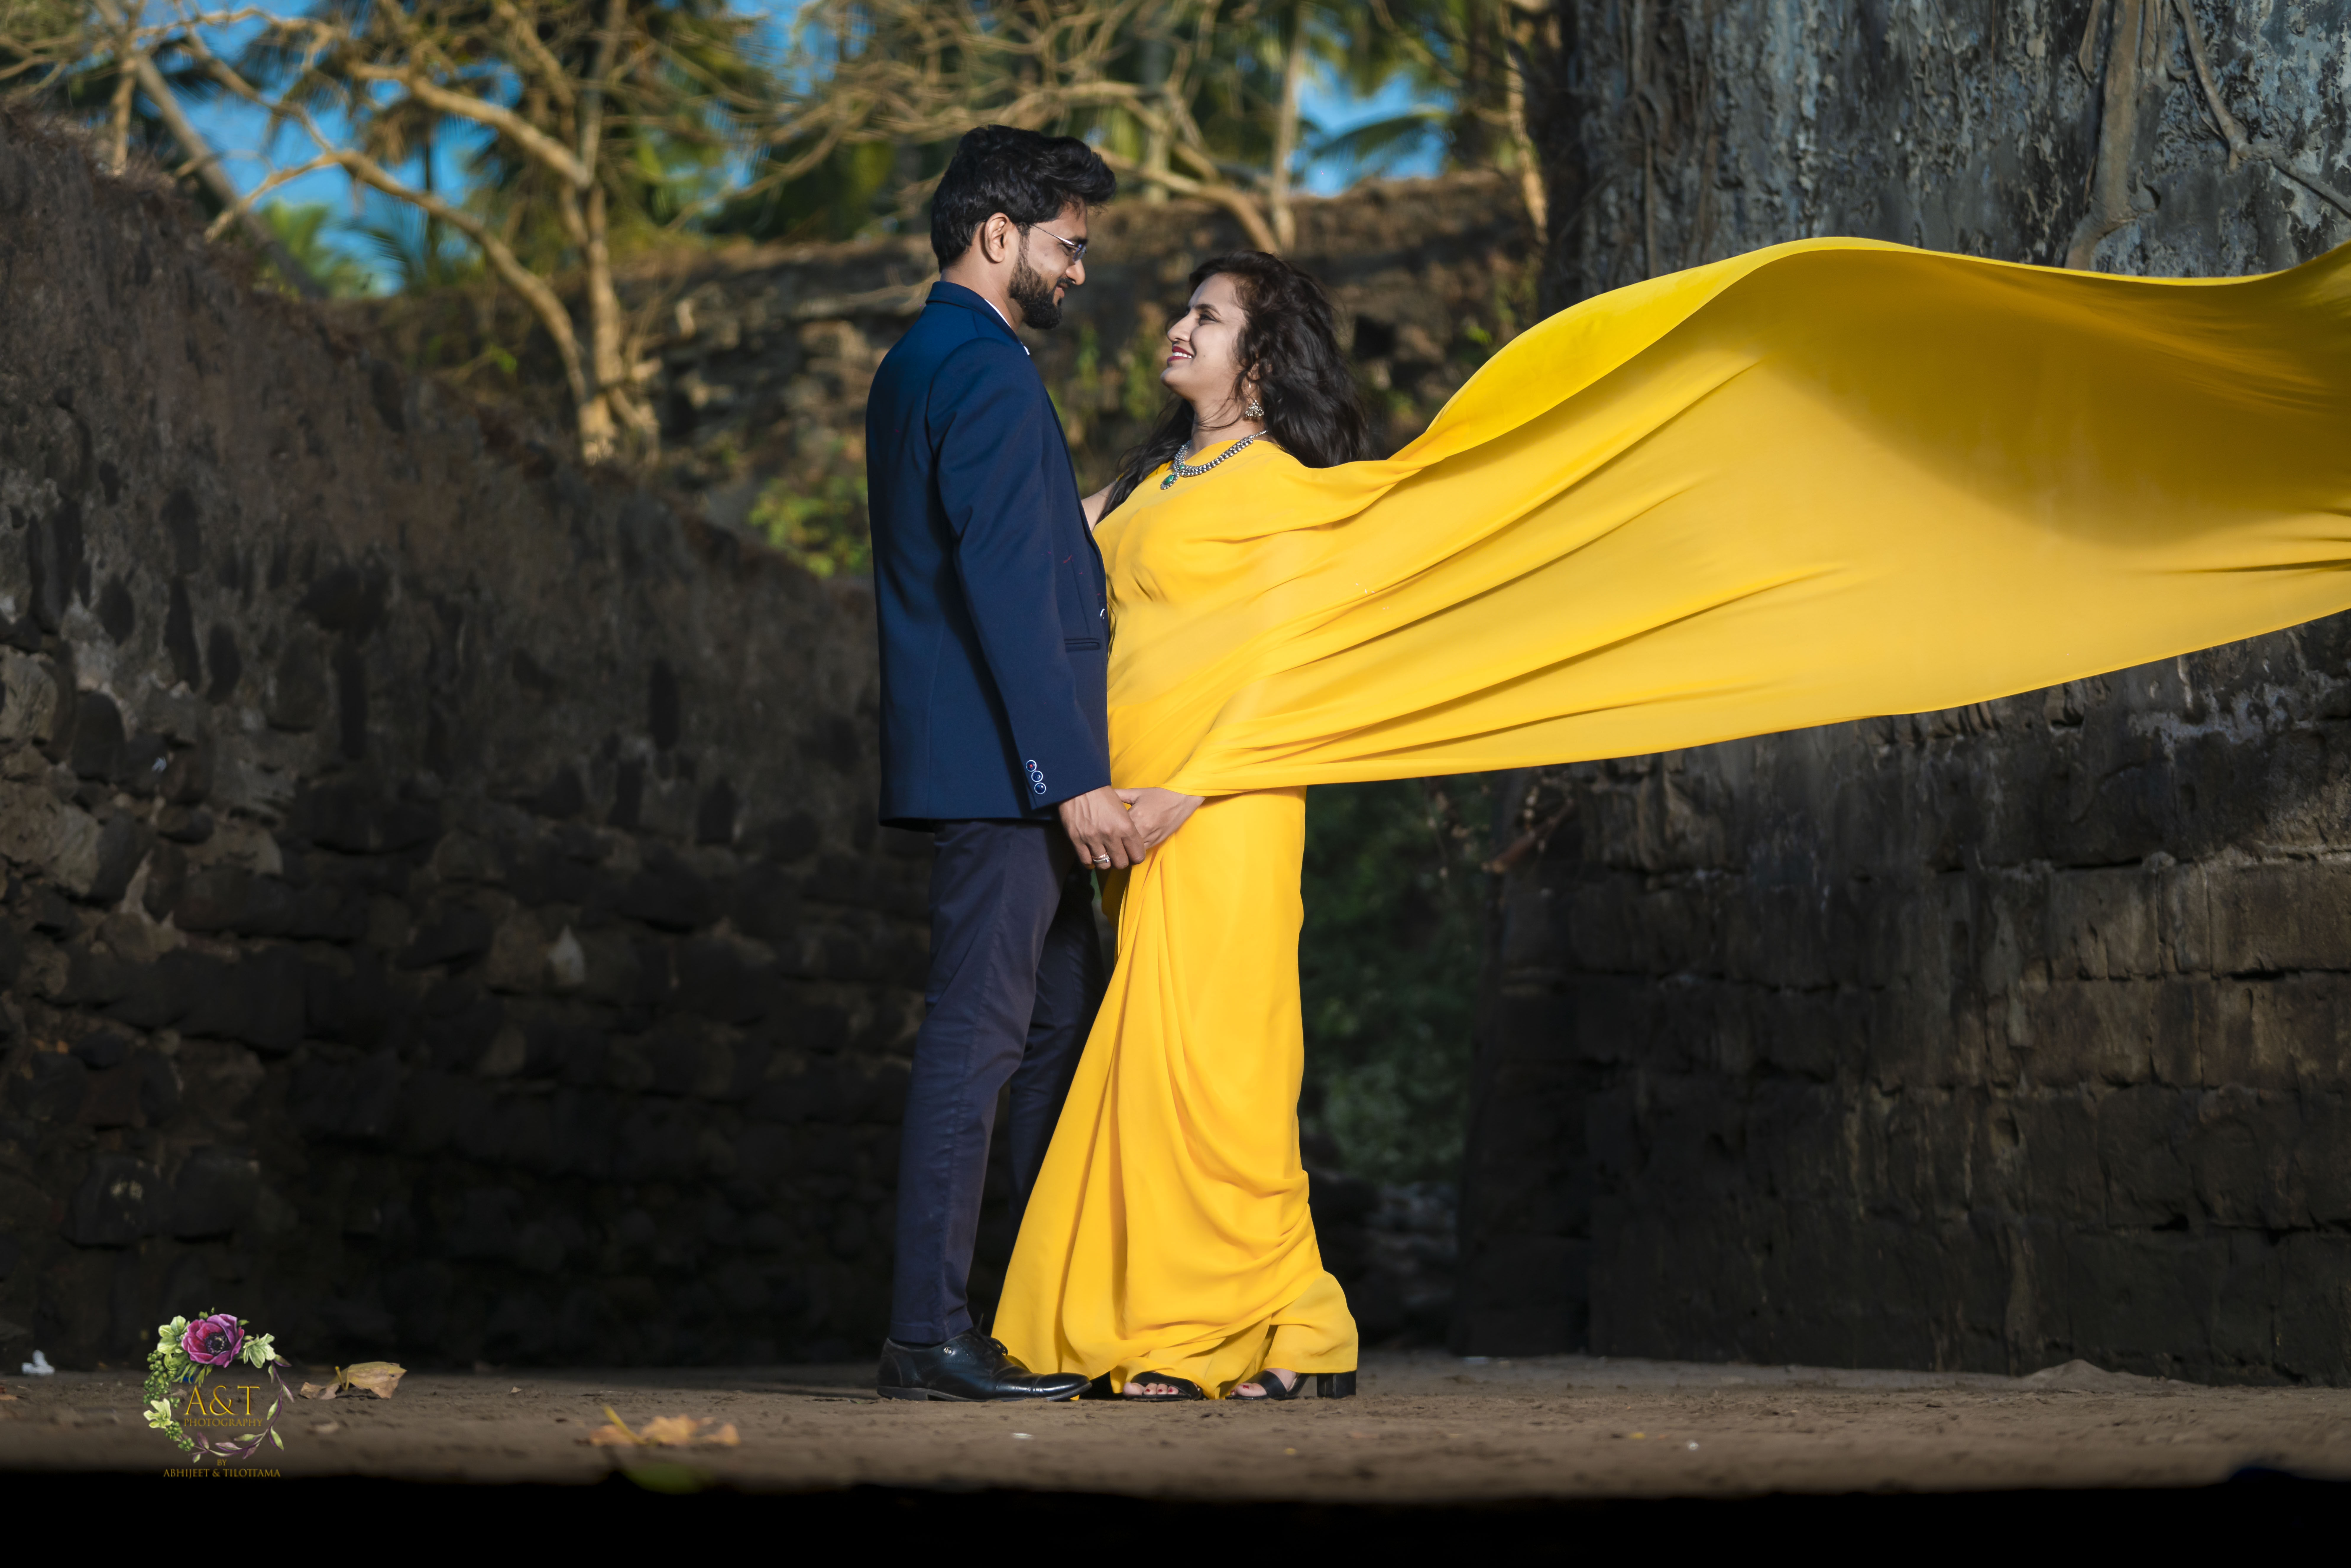 Bhushan&Nayan02|Pre-wedding in Saree|Indian Wedding Photographer in Pune